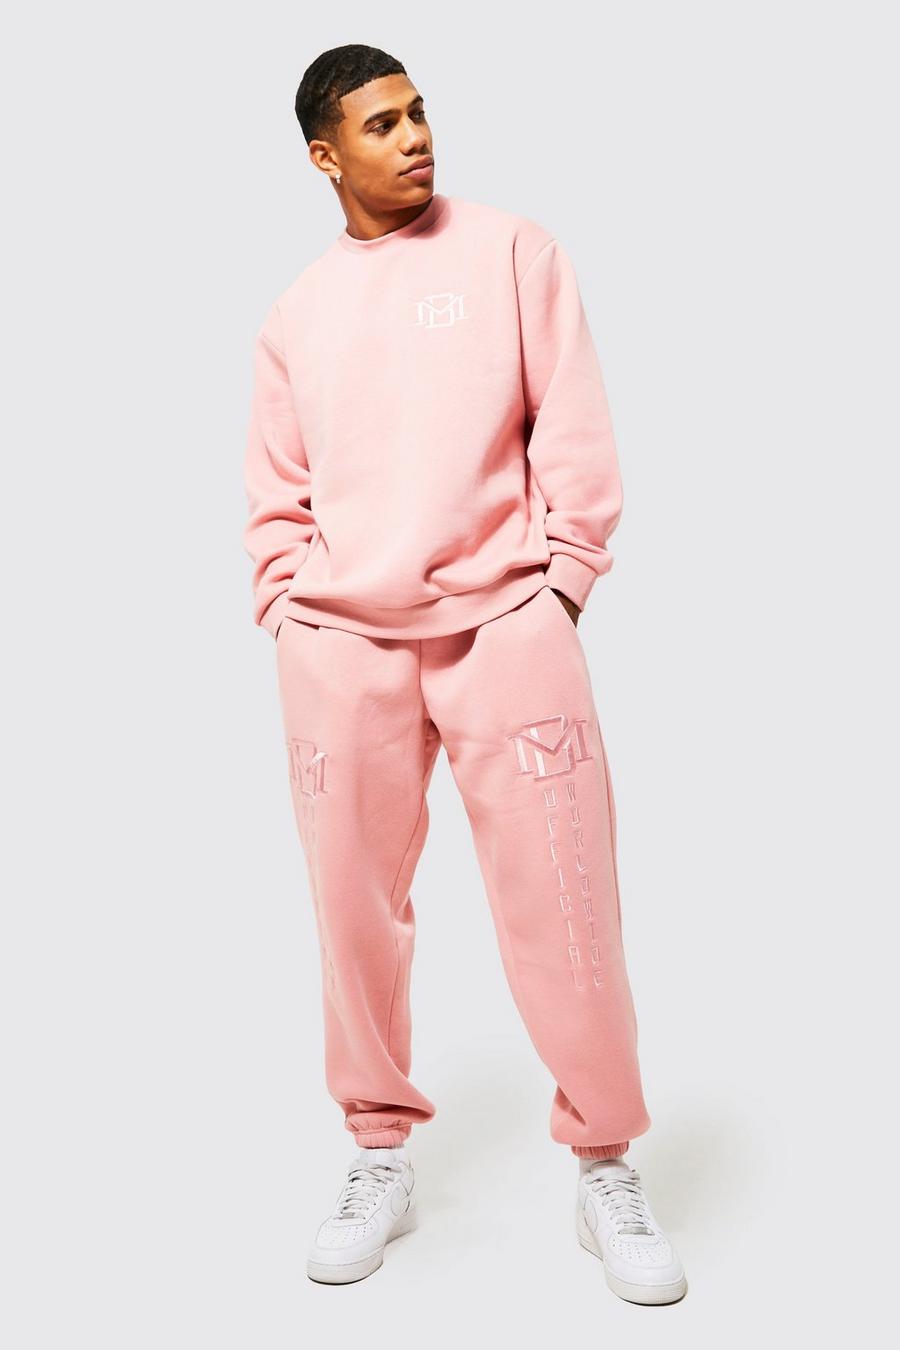 https://media.boohoo.com/i/boohoo/bmm18021_pink_xl/male-pink-baggy-bm-embroidered-sweater-tracksuit/?w=900&qlt=default&fmt.jp2.qlt=70&fmt=auto&sm=fit